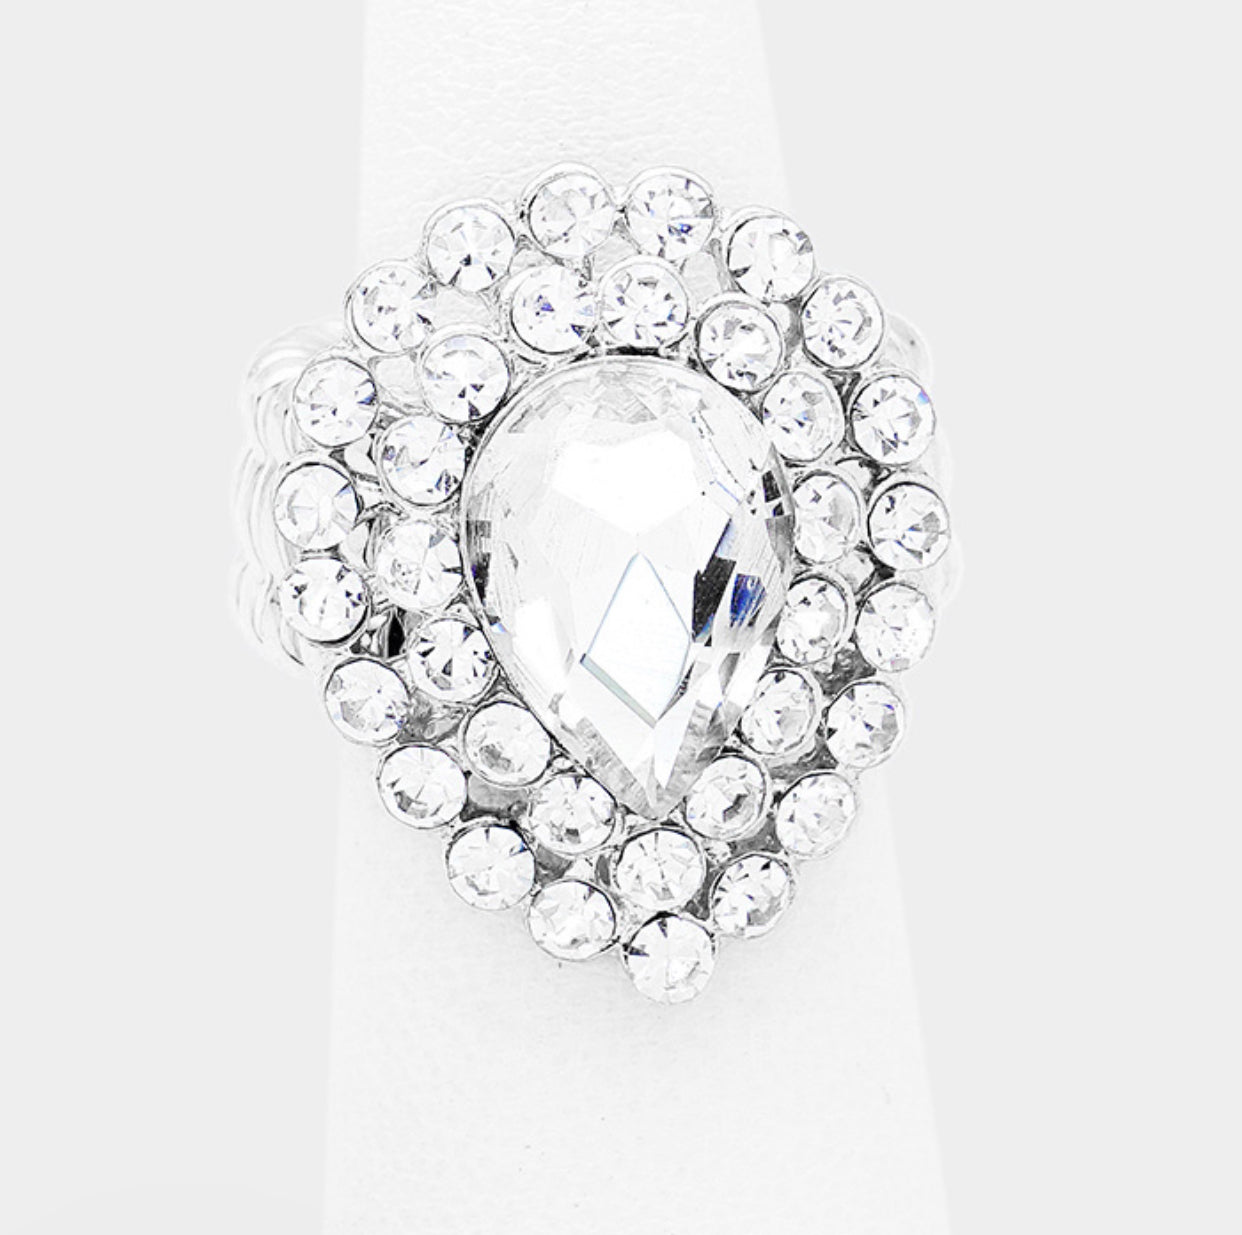 Baby Gina - clear silver marquise rhinestone jewelry set